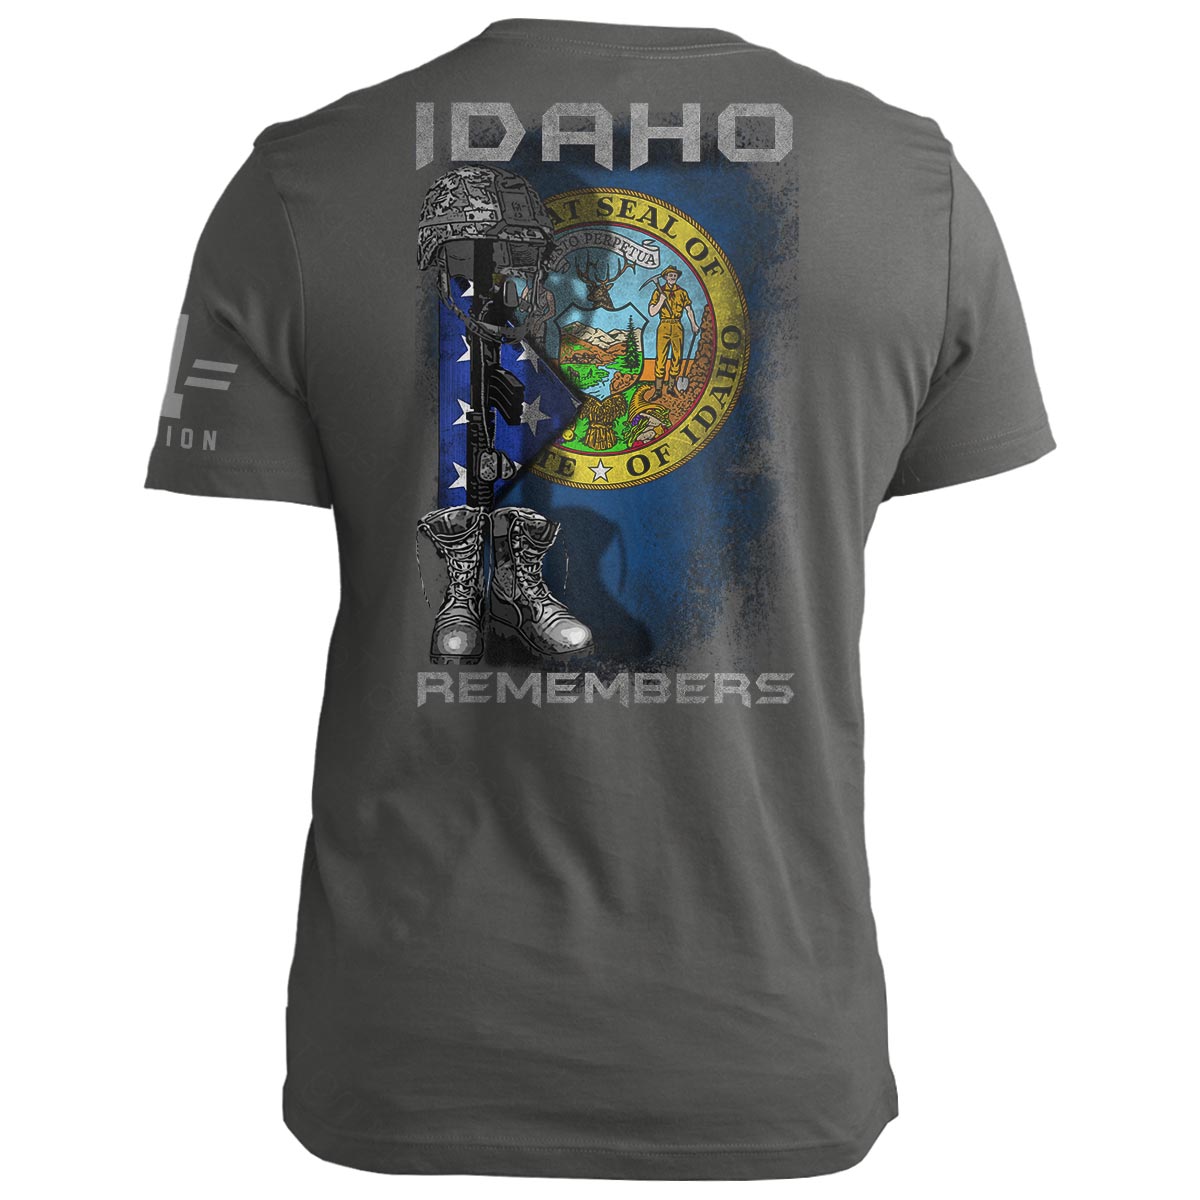 Idaho Remembers